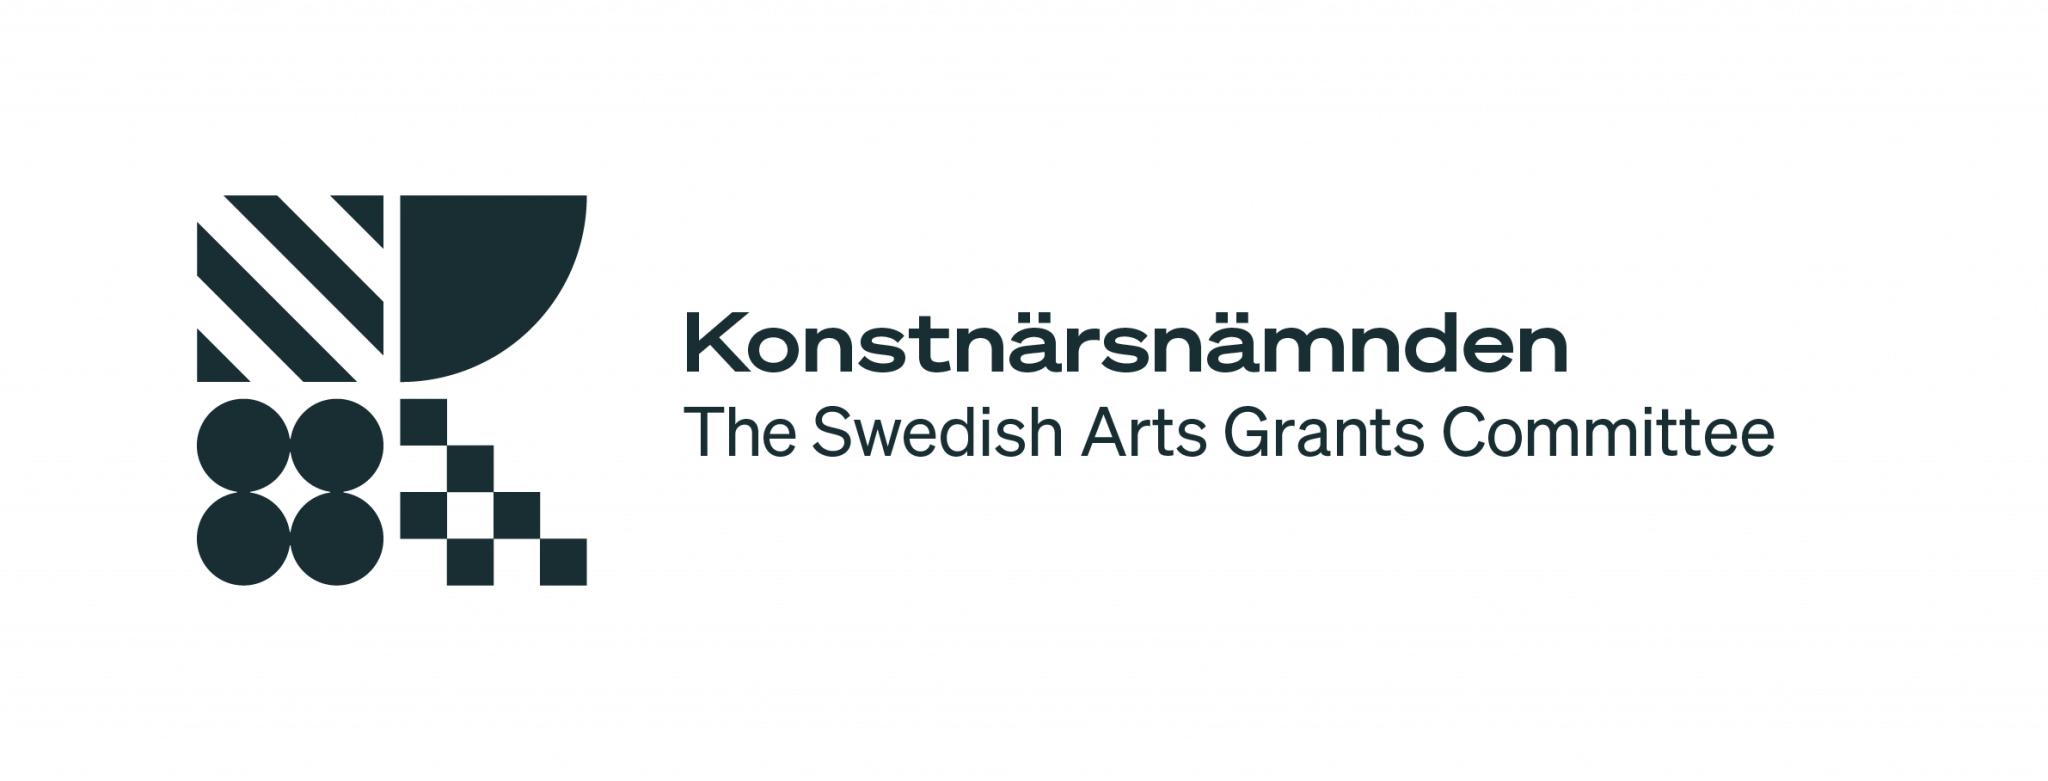 Swedish Arts Grant Committee logo